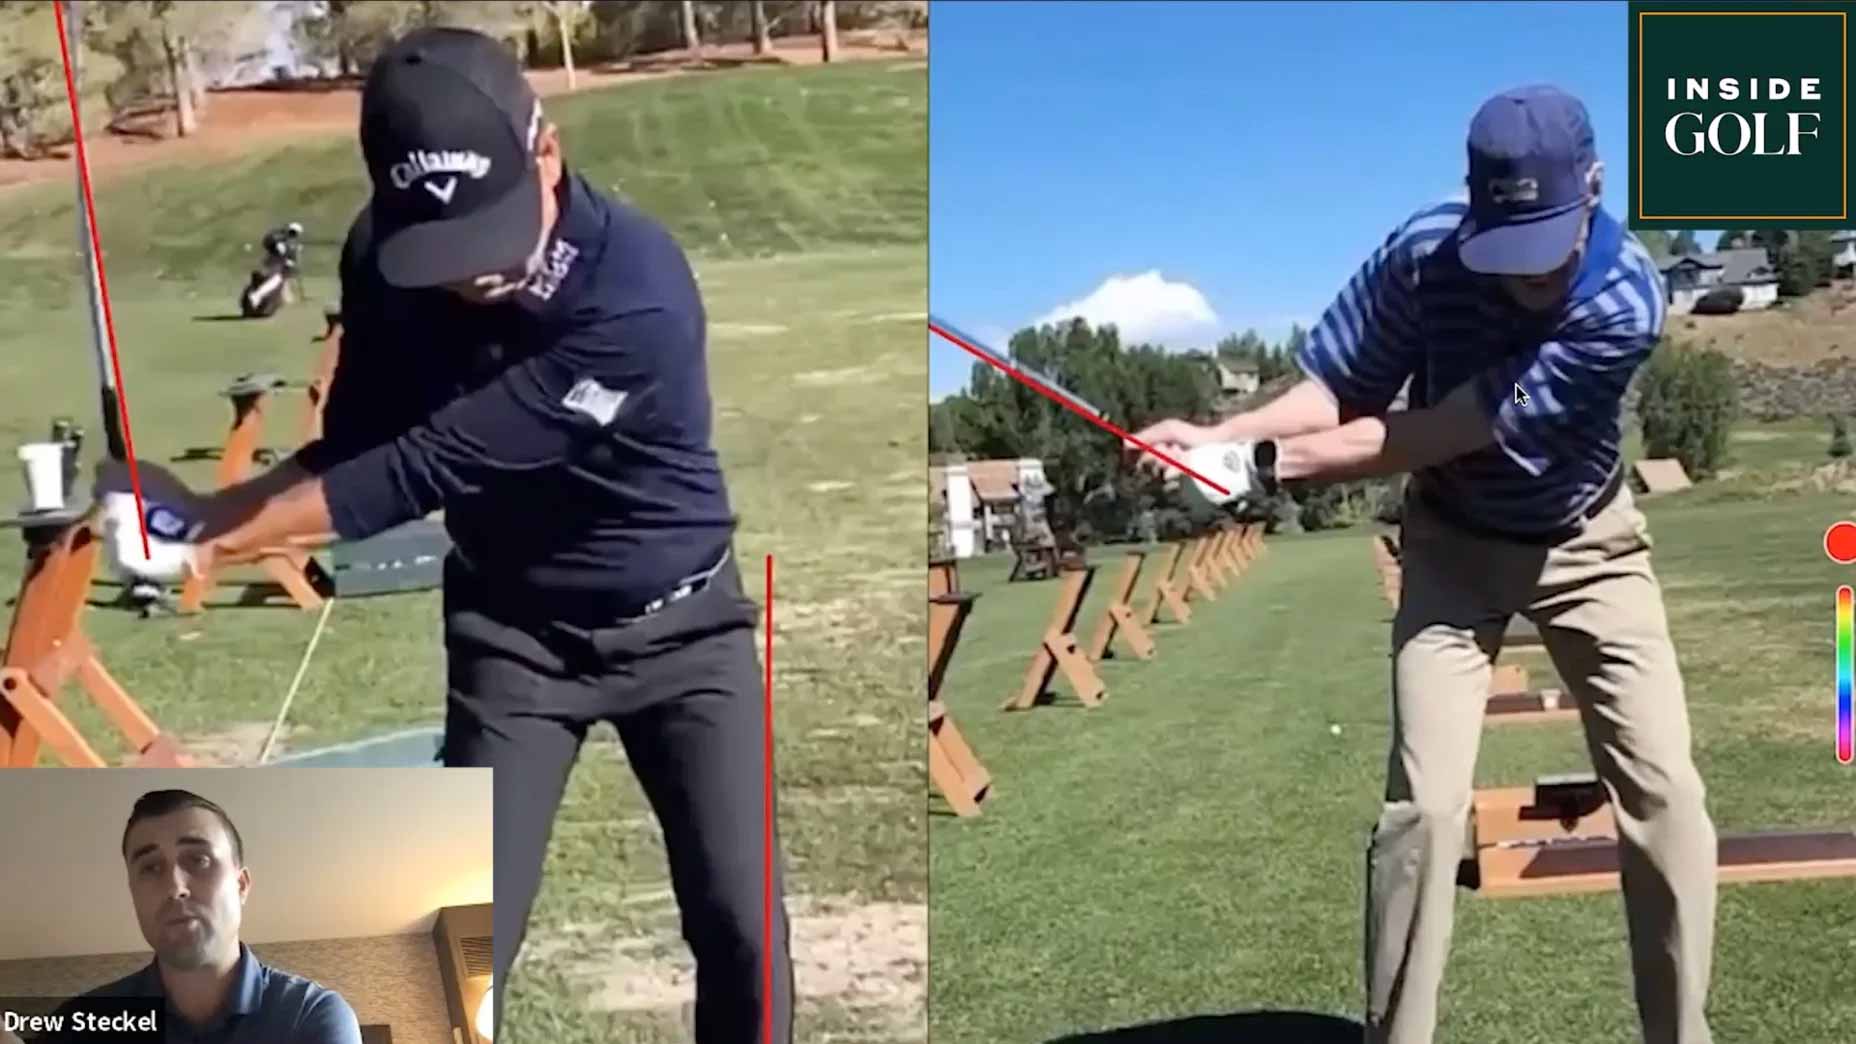 Golf instructor demonstrates swing drill